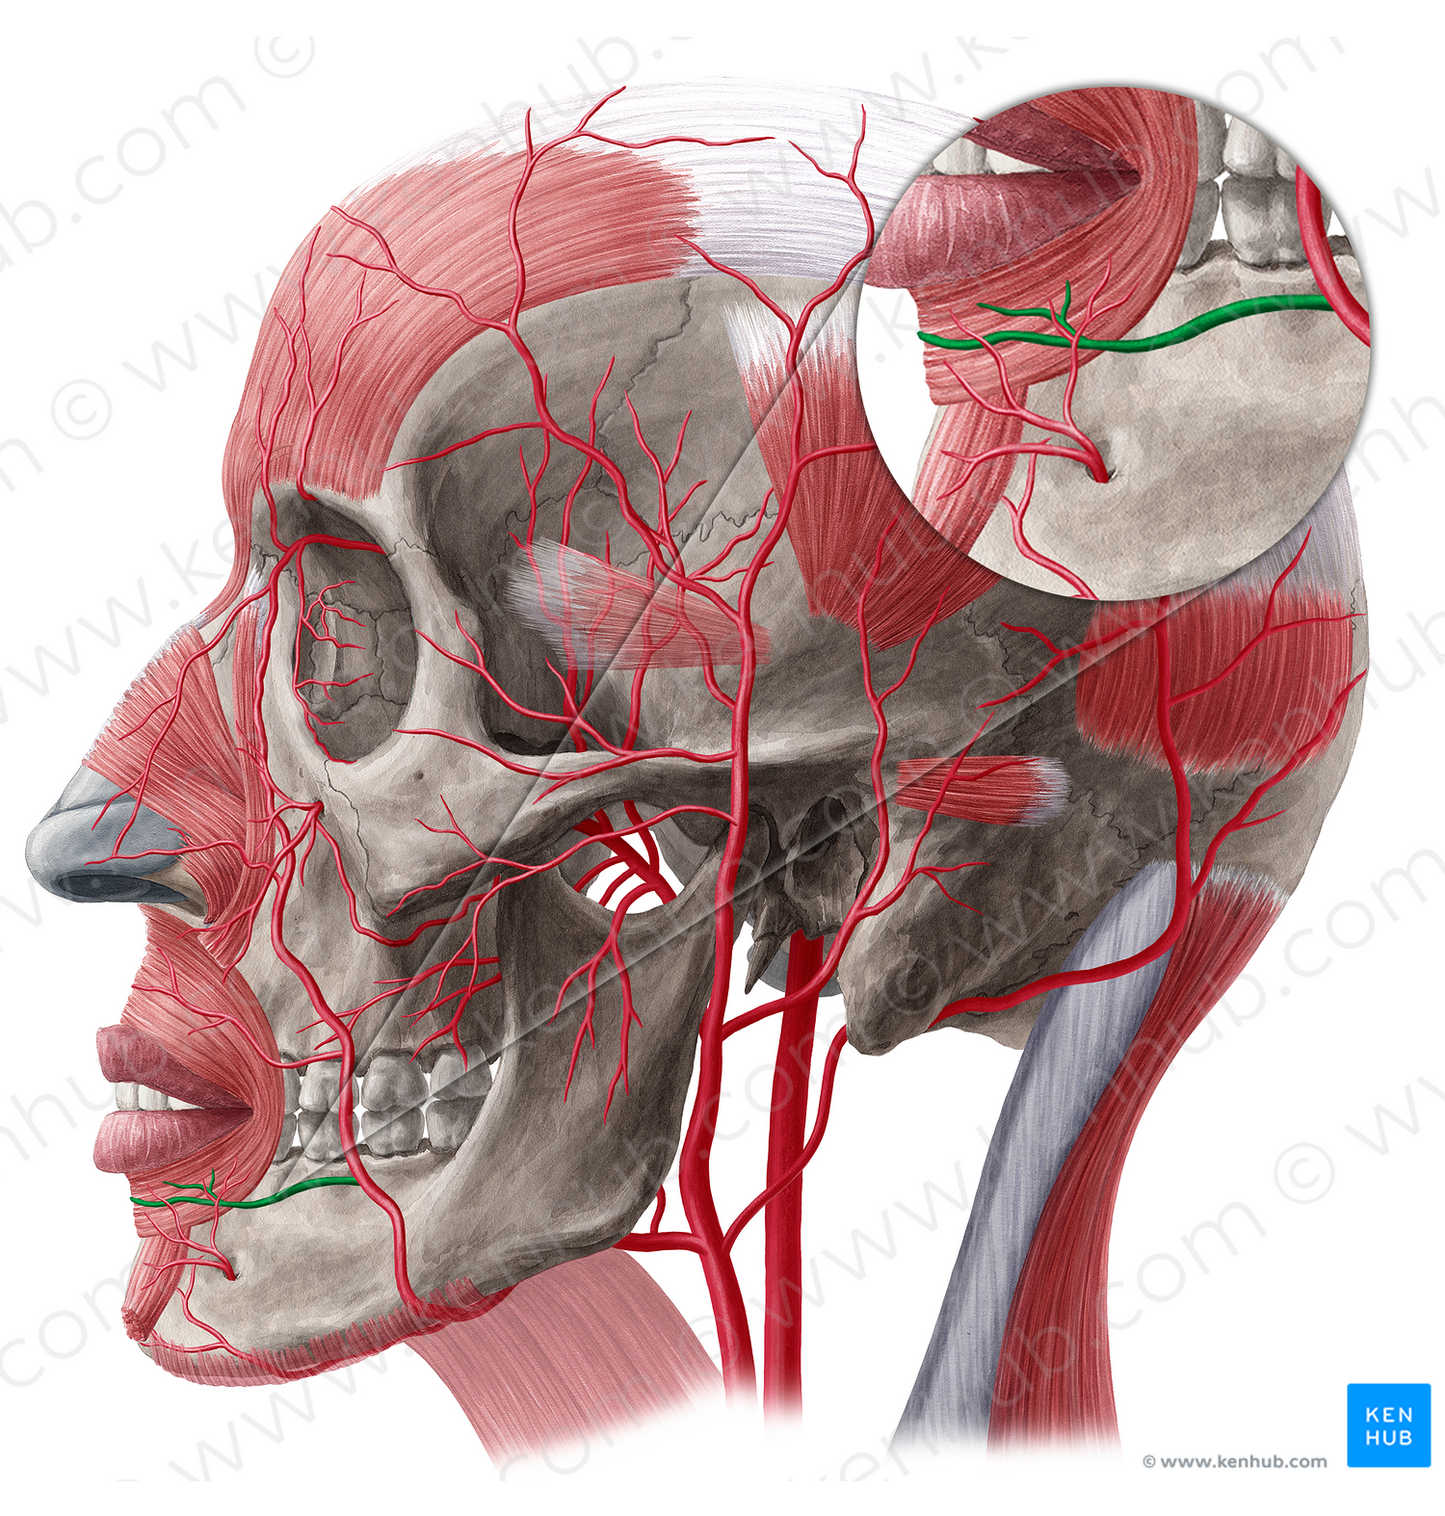 Inferior labial artery (#1466)